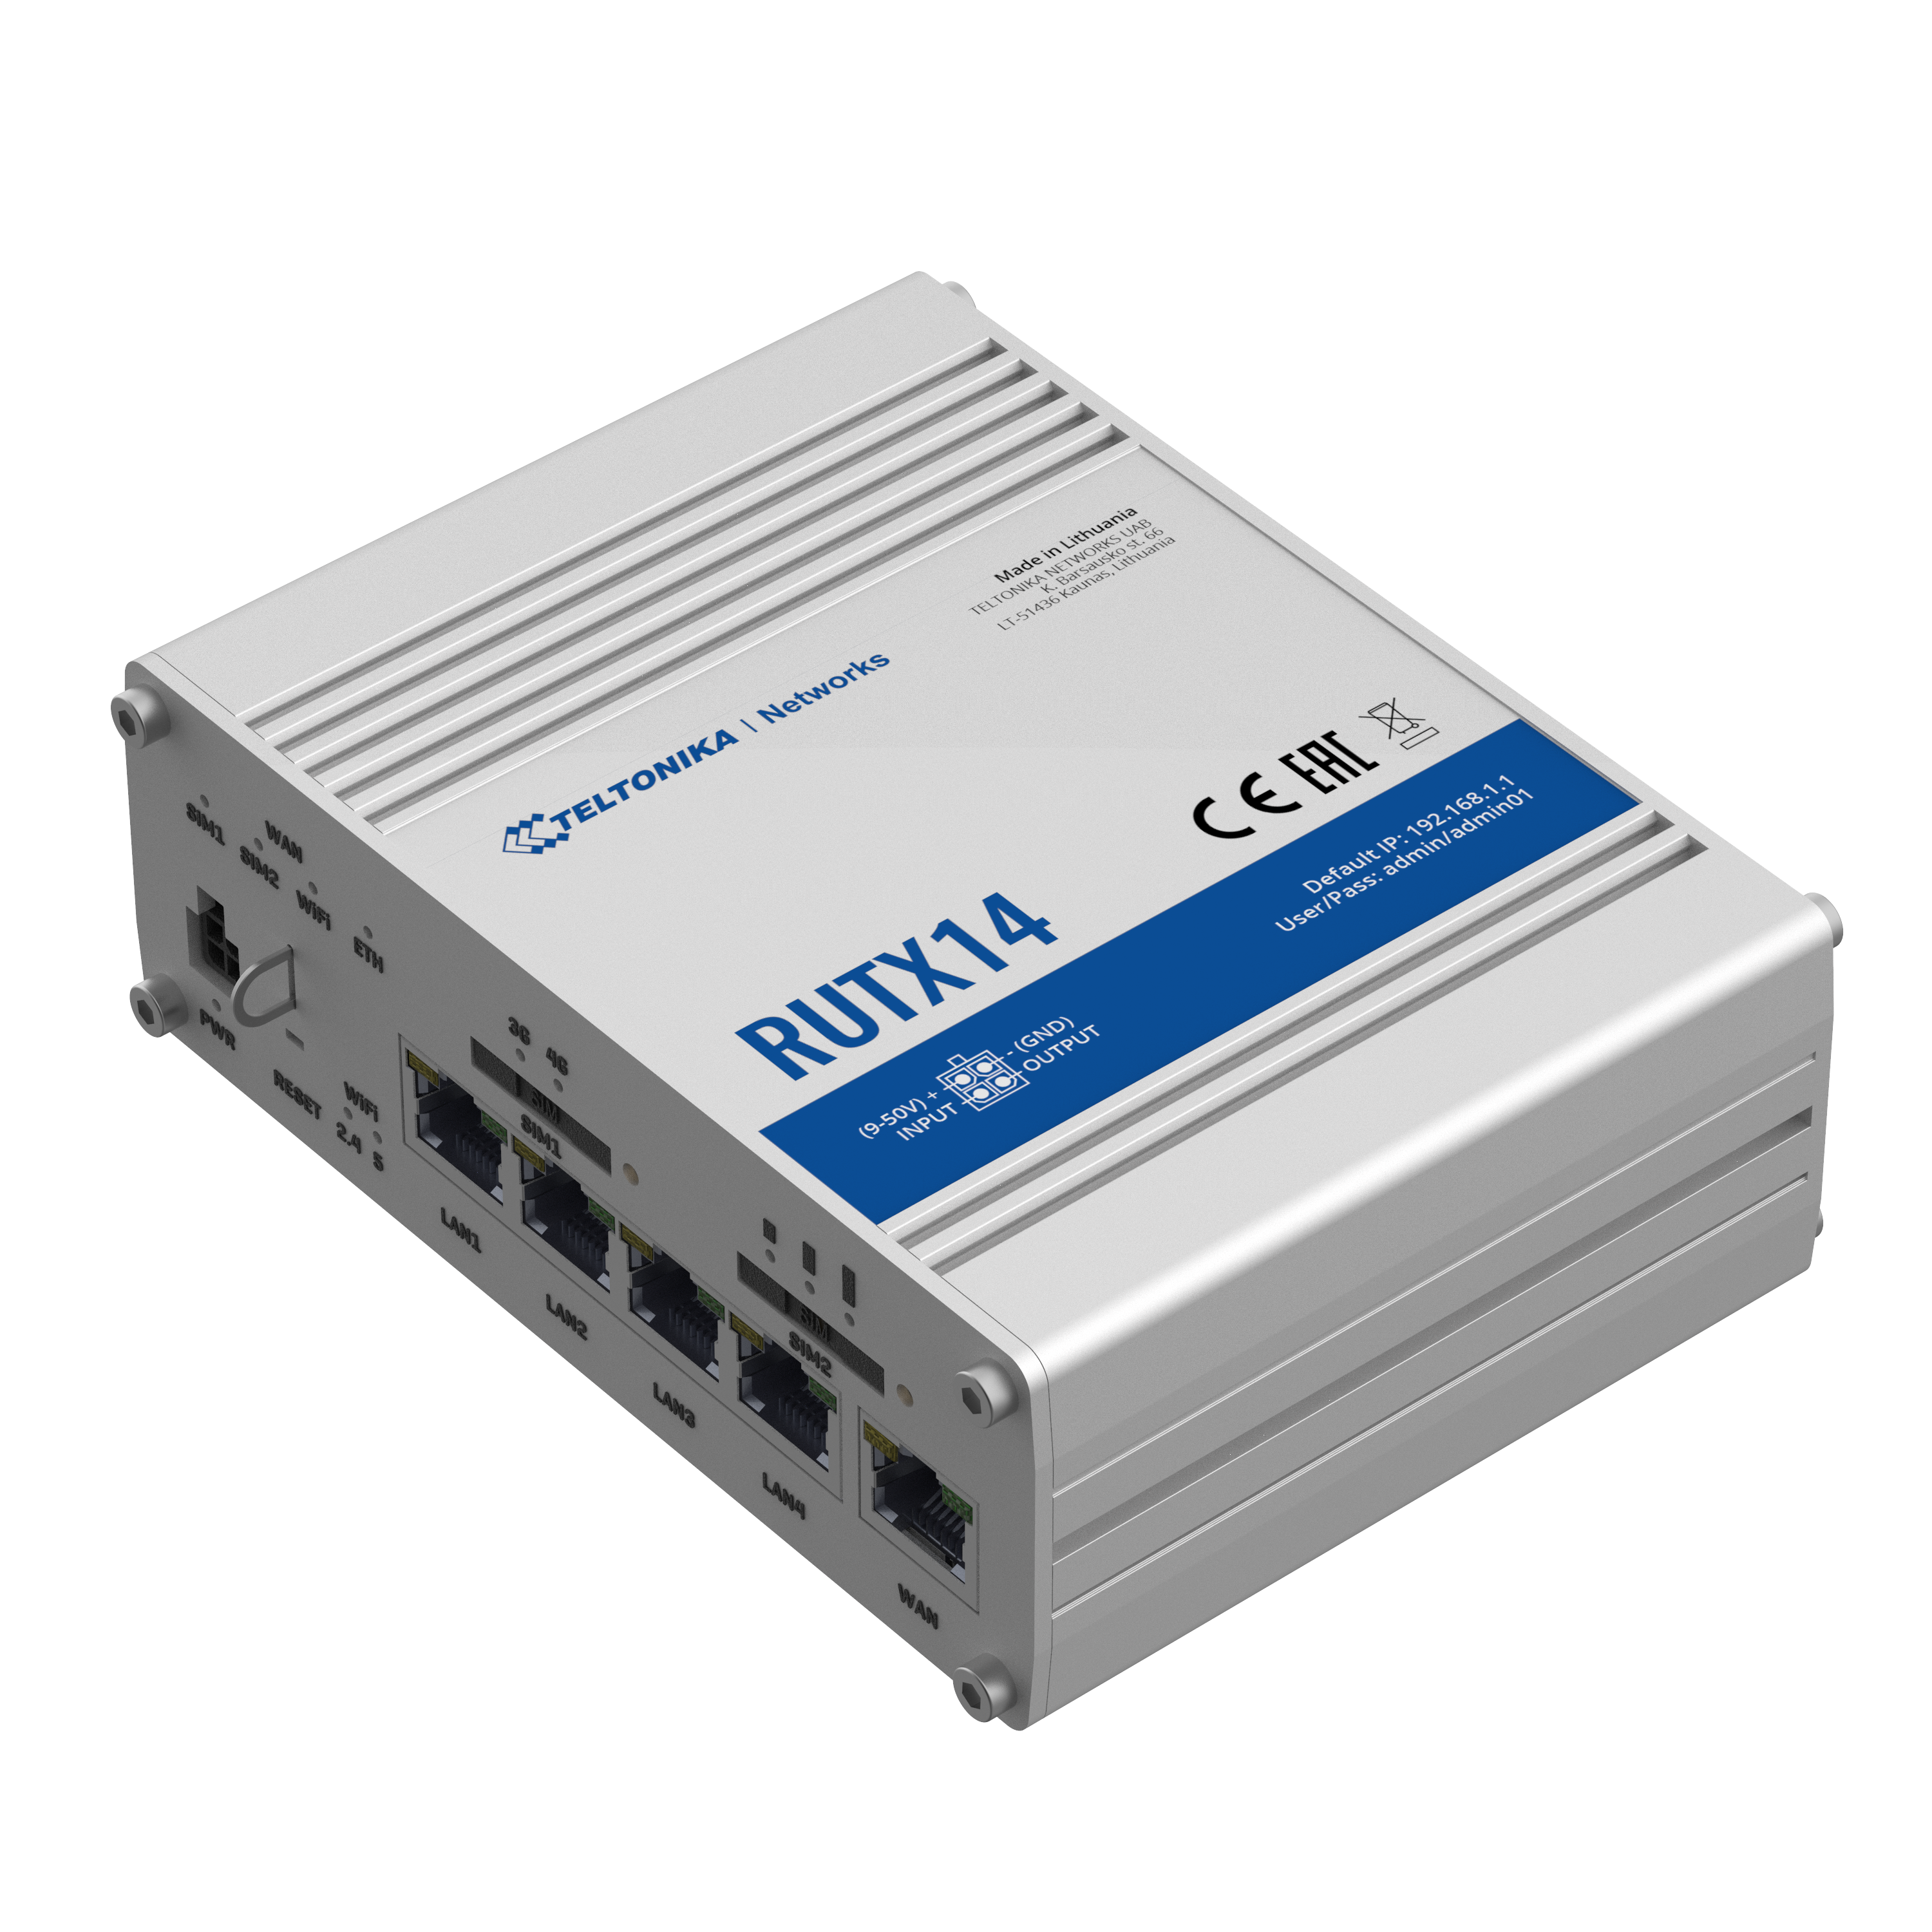 RUTX14 - Industrial Cellular Router. 4G LTE (Cat 12)